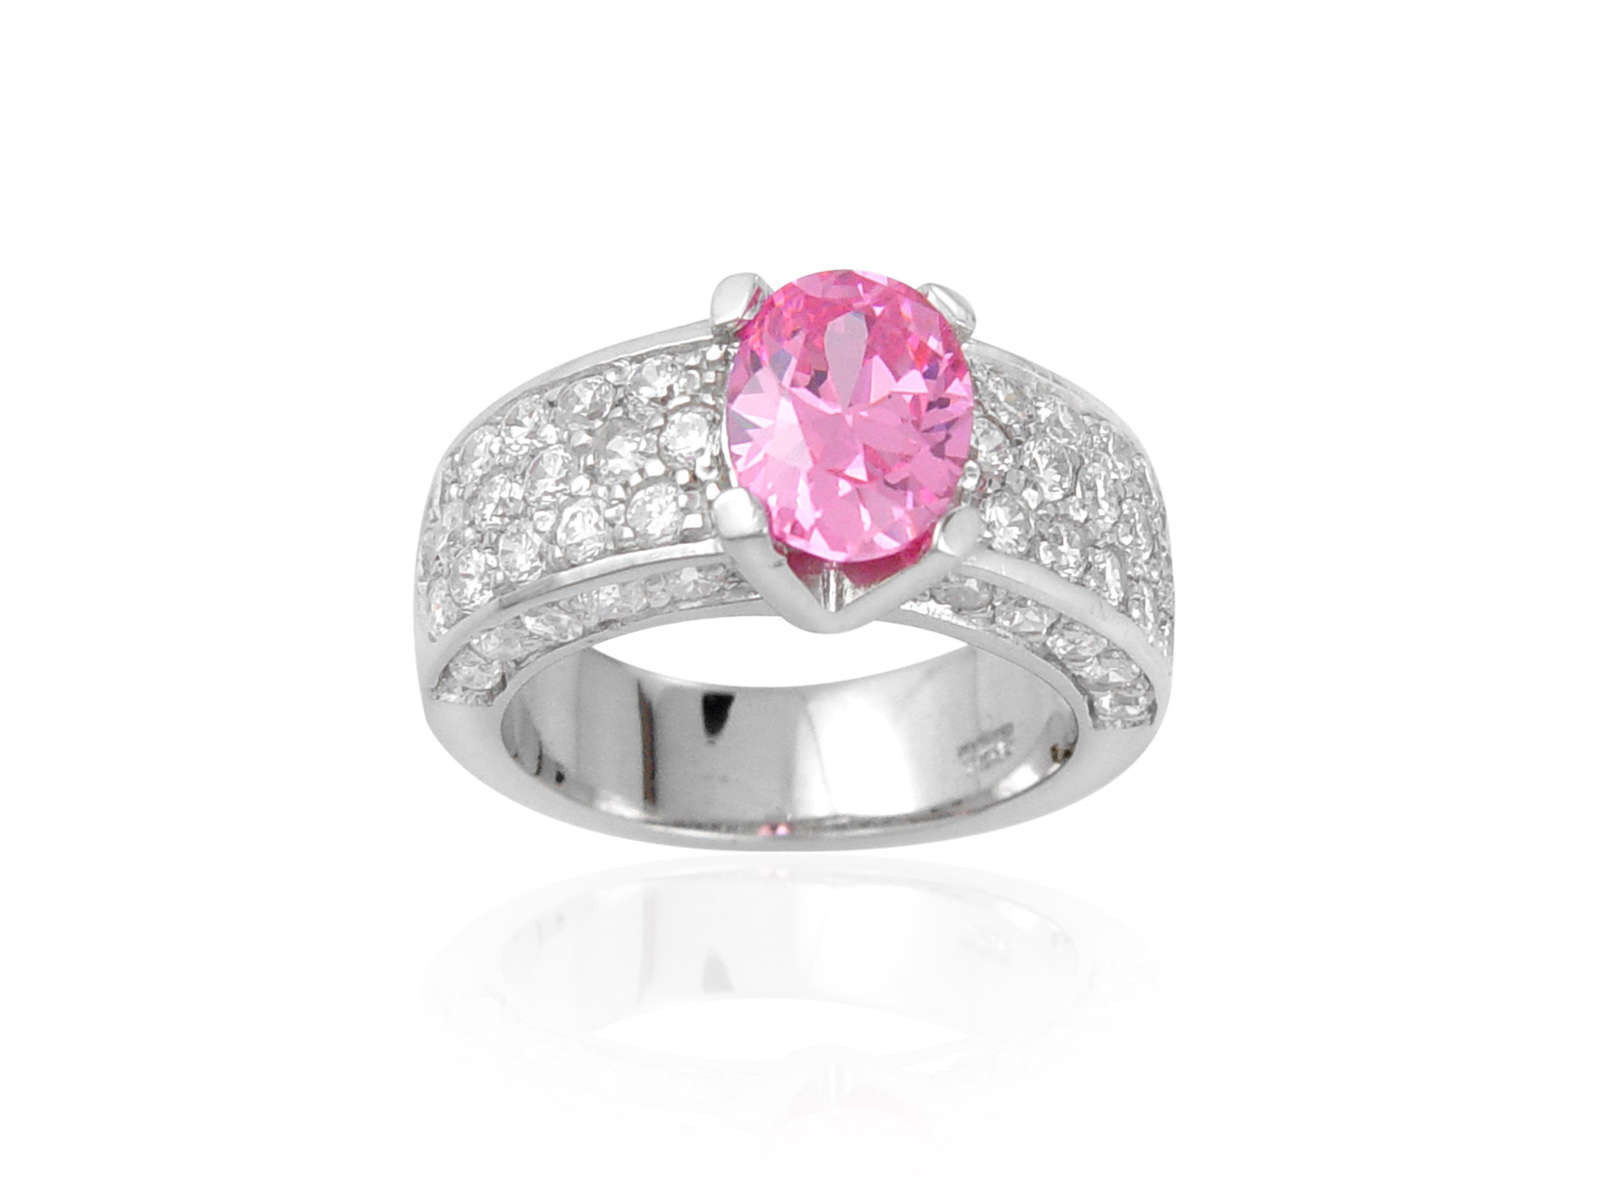 Camo Diamond Wedding Rings
 New Pink Camo Diamond Wedding Rings for Her Matvuk